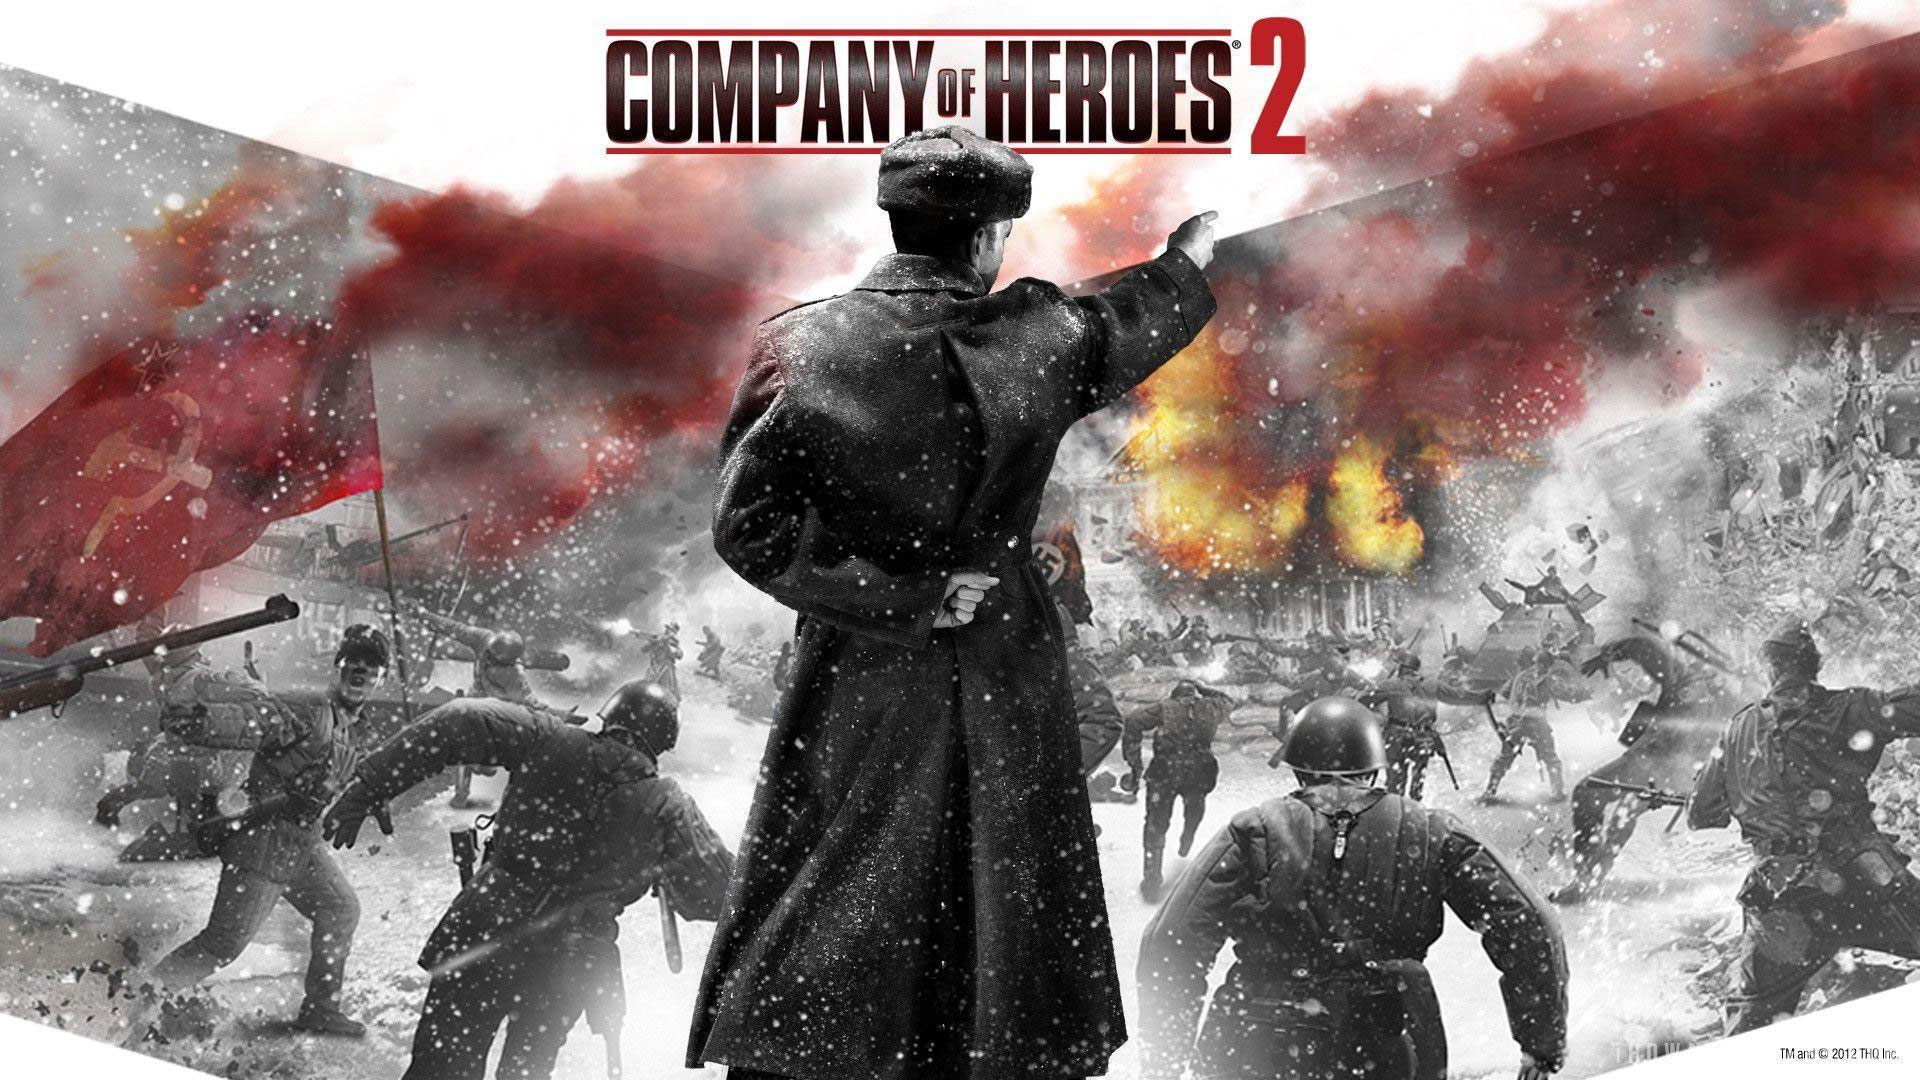 Company of Heroes 2 را به رایگان دریافت کنید